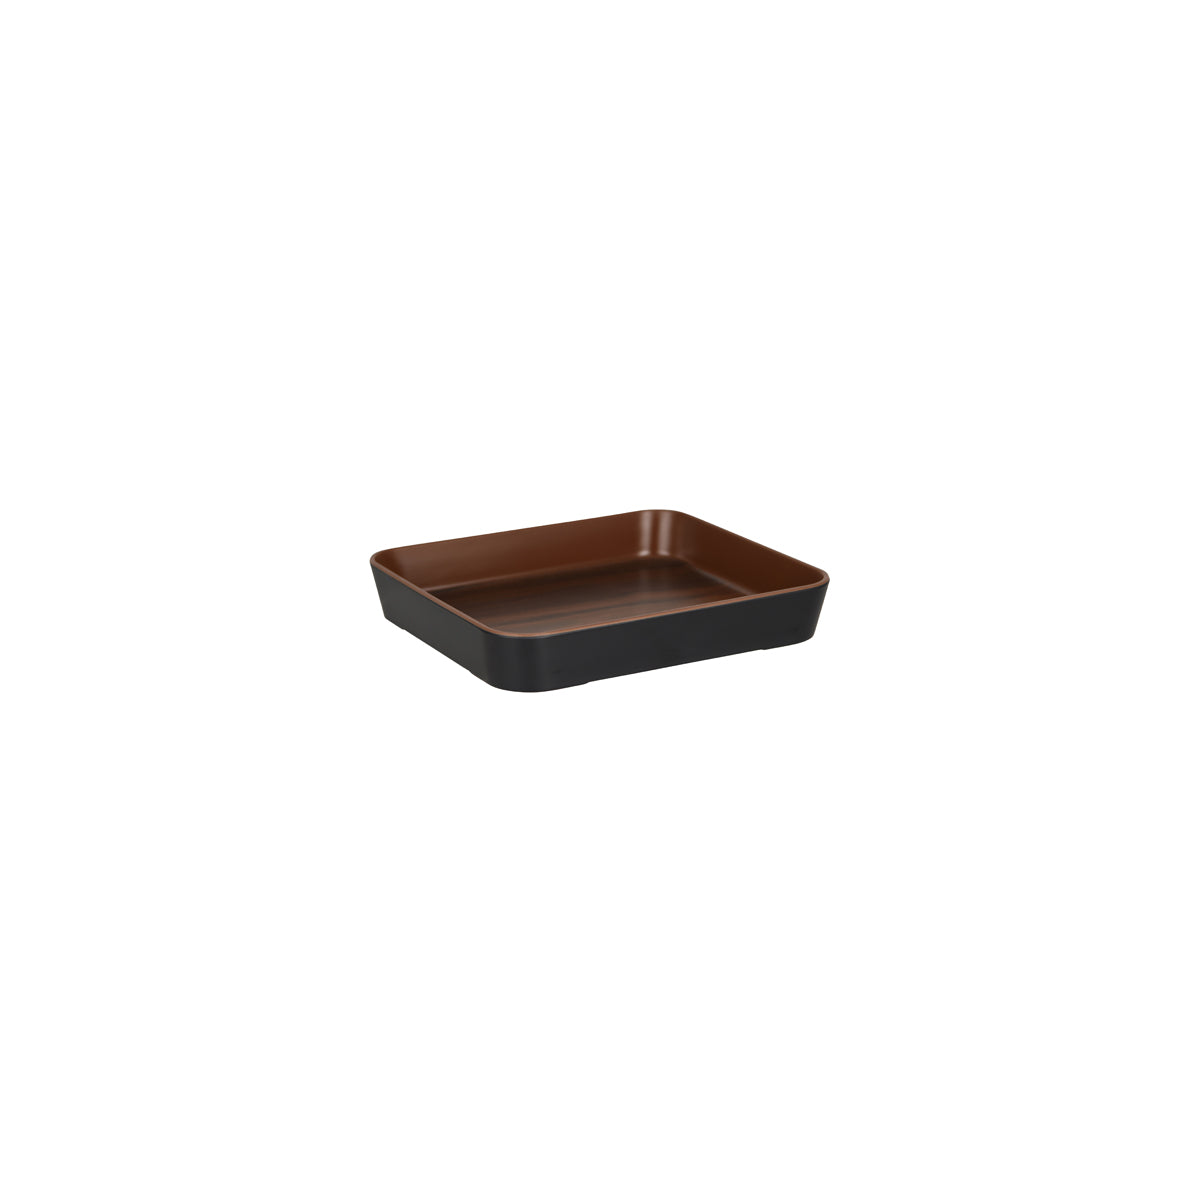 46395 Zicco Zicco Bento Box Walnut / Black Inroom Insert Tomkin Australia Hospitality Supplies